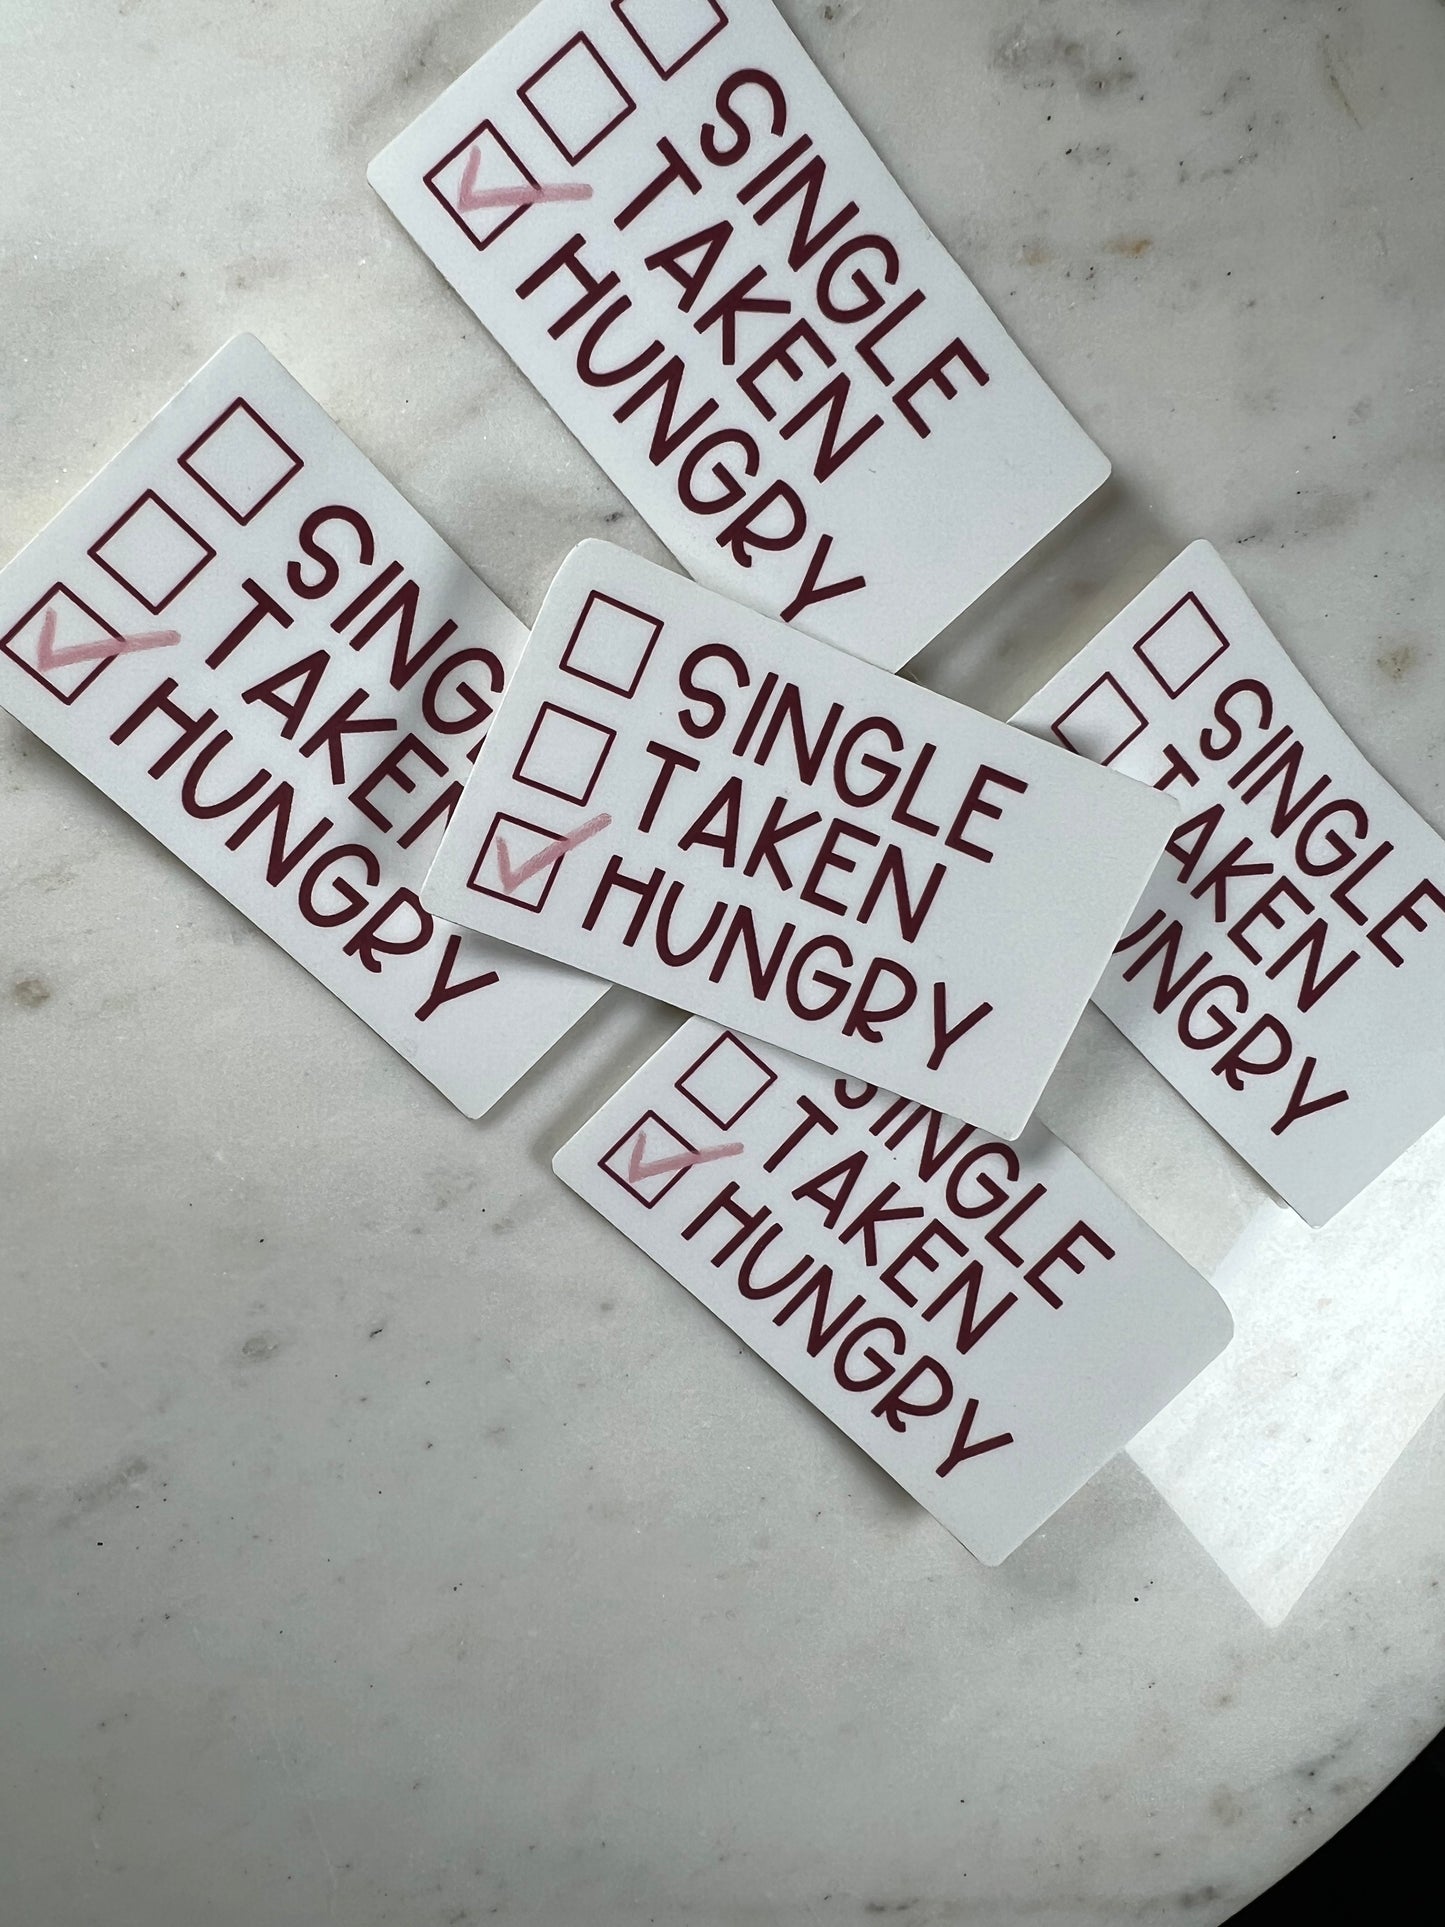 Single Taken Hungry Sticker